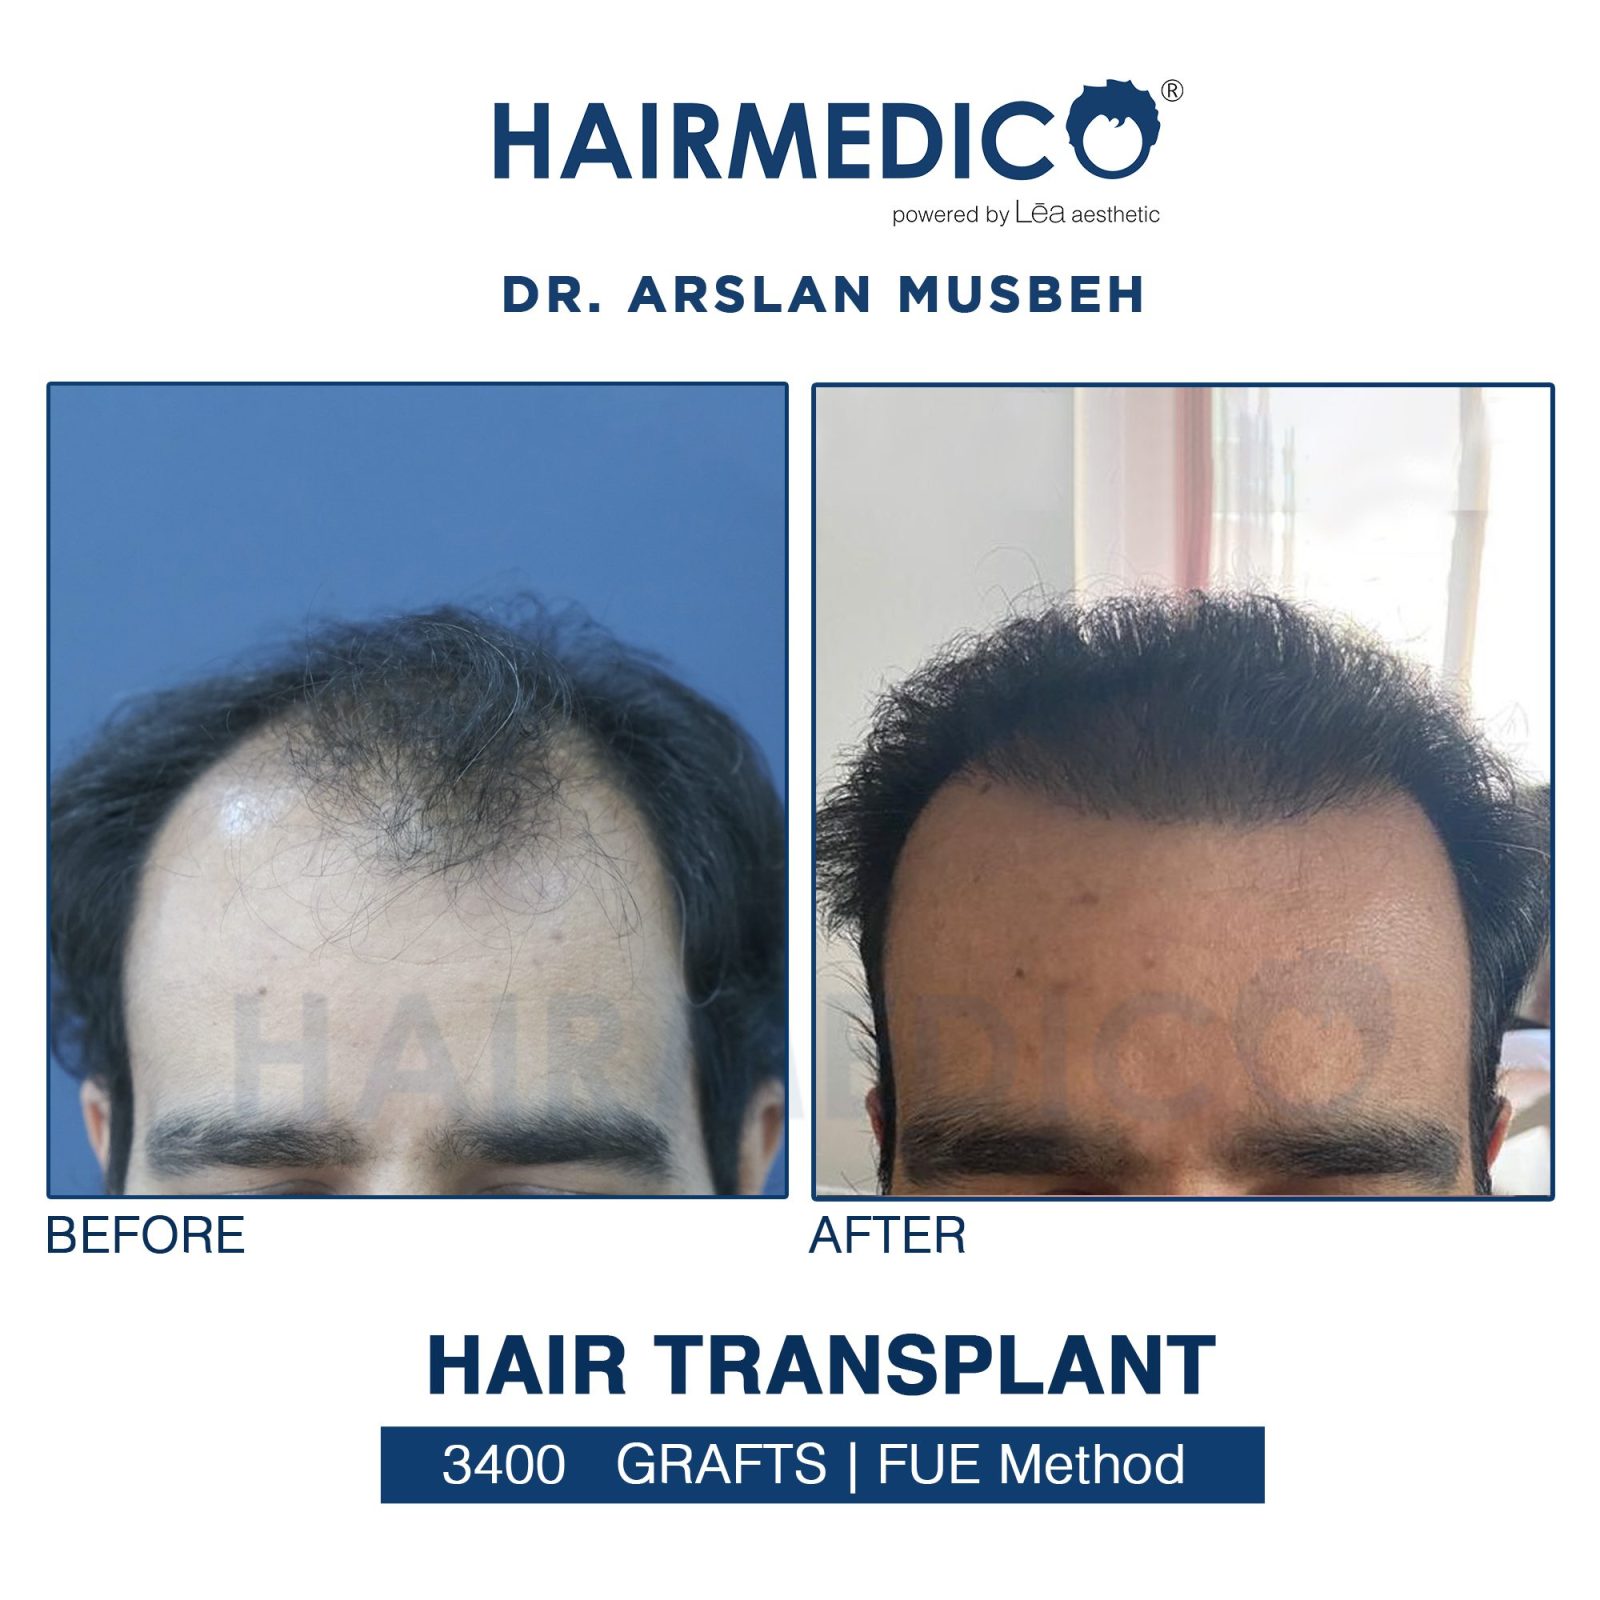 Hair Transplant in Turkey. Dr Arslan Musbeh